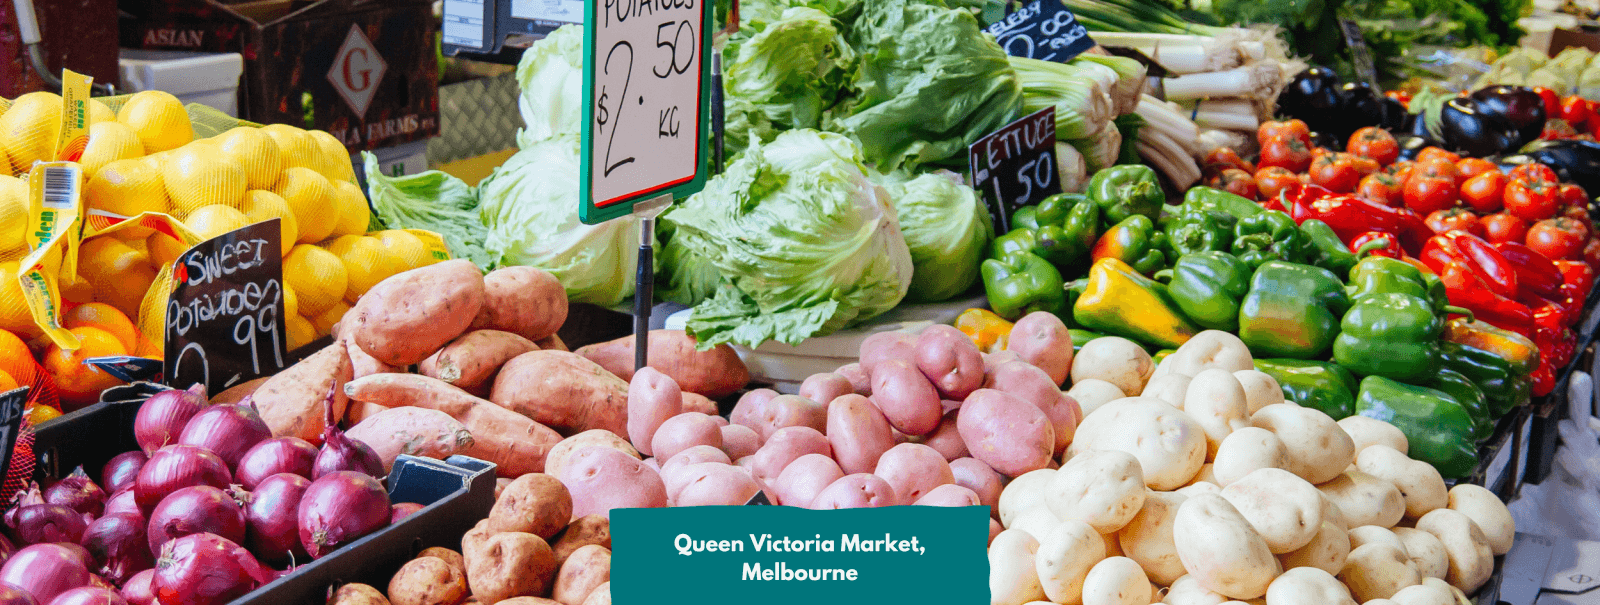 Queen Victoria Market in Melbourne, Australia